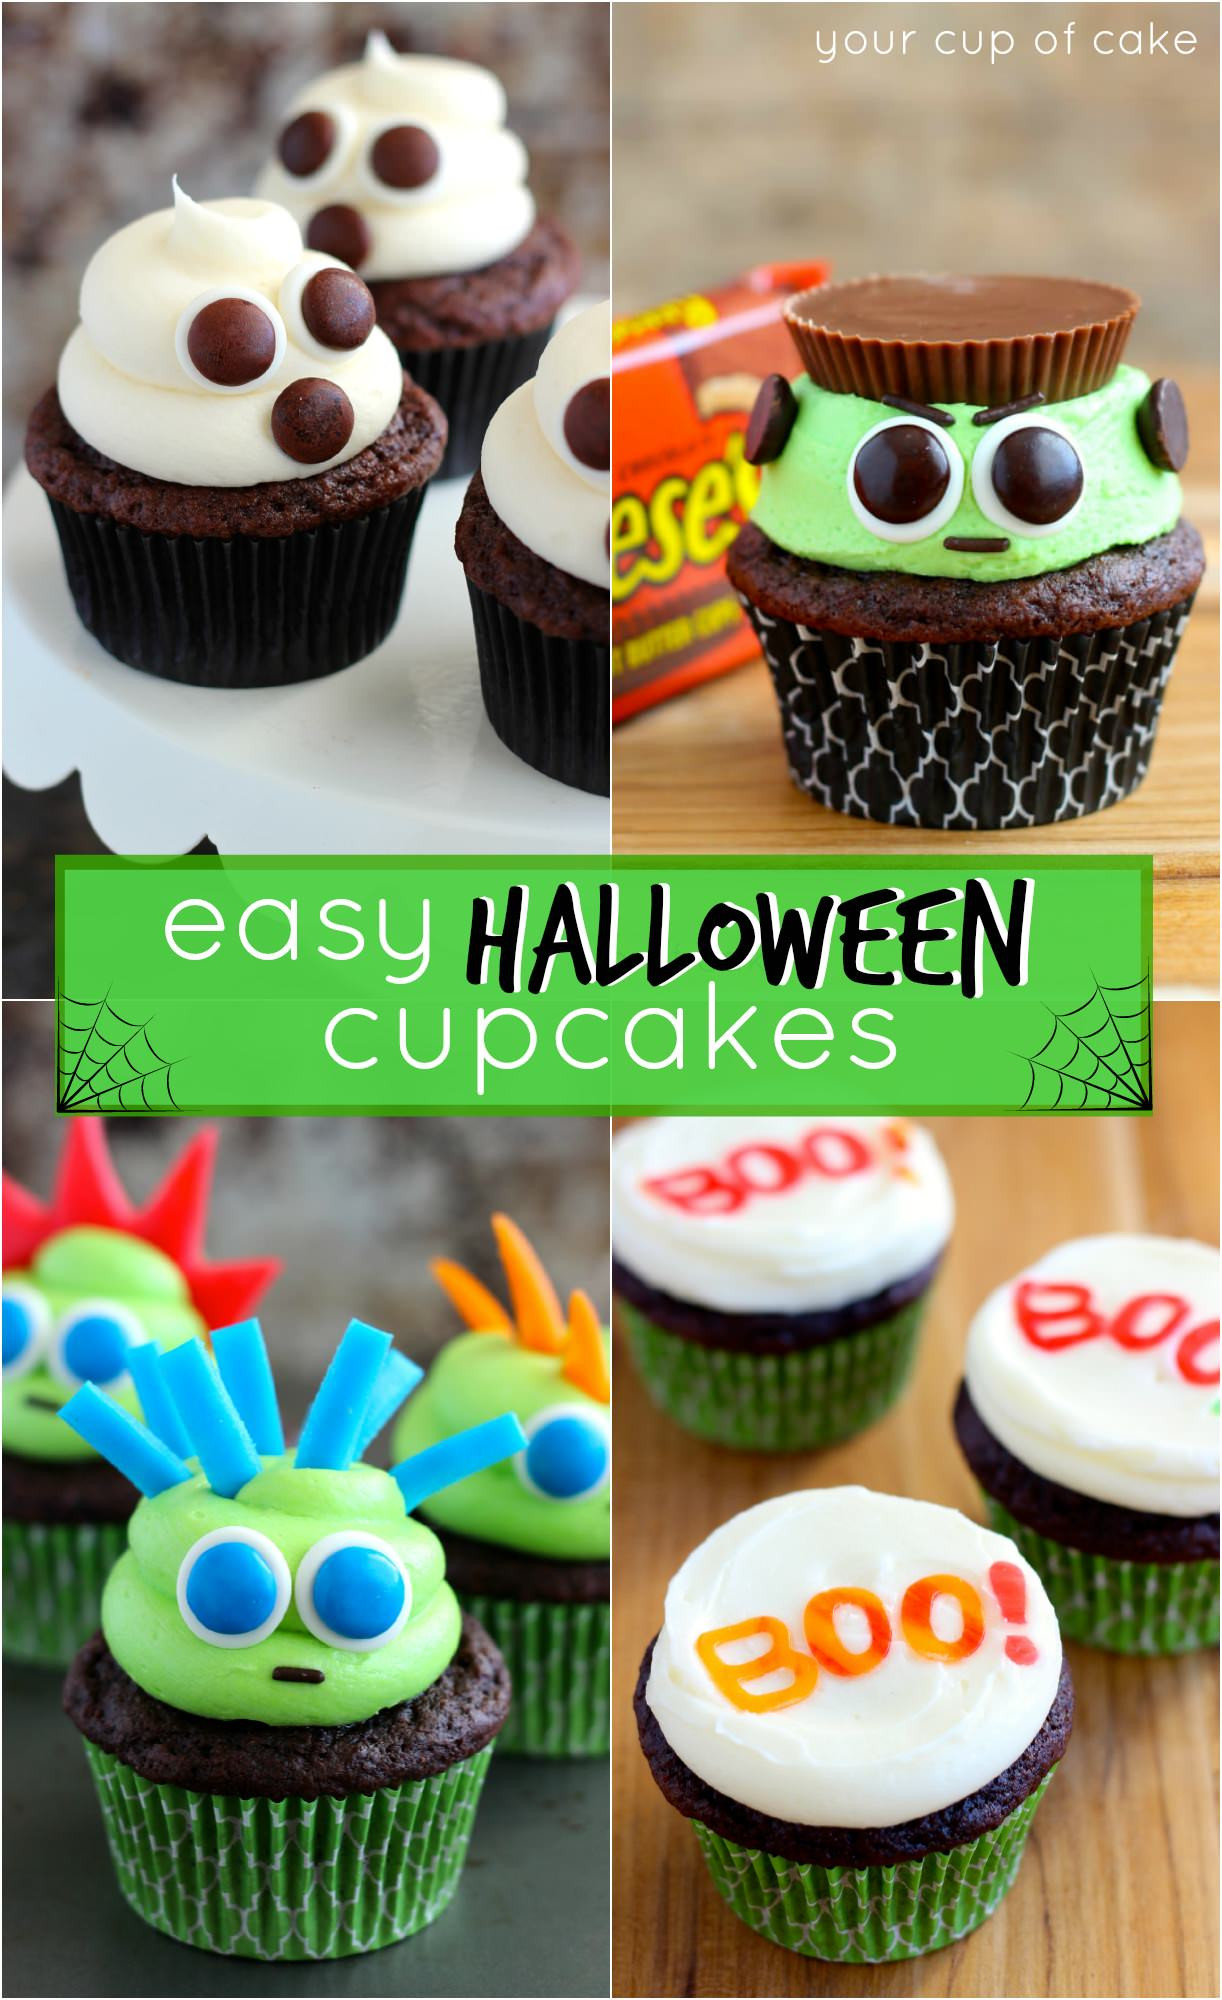 Halloween Cakes Ideas
 Easy Halloween Cupcake Ideas Your Cup of Cake